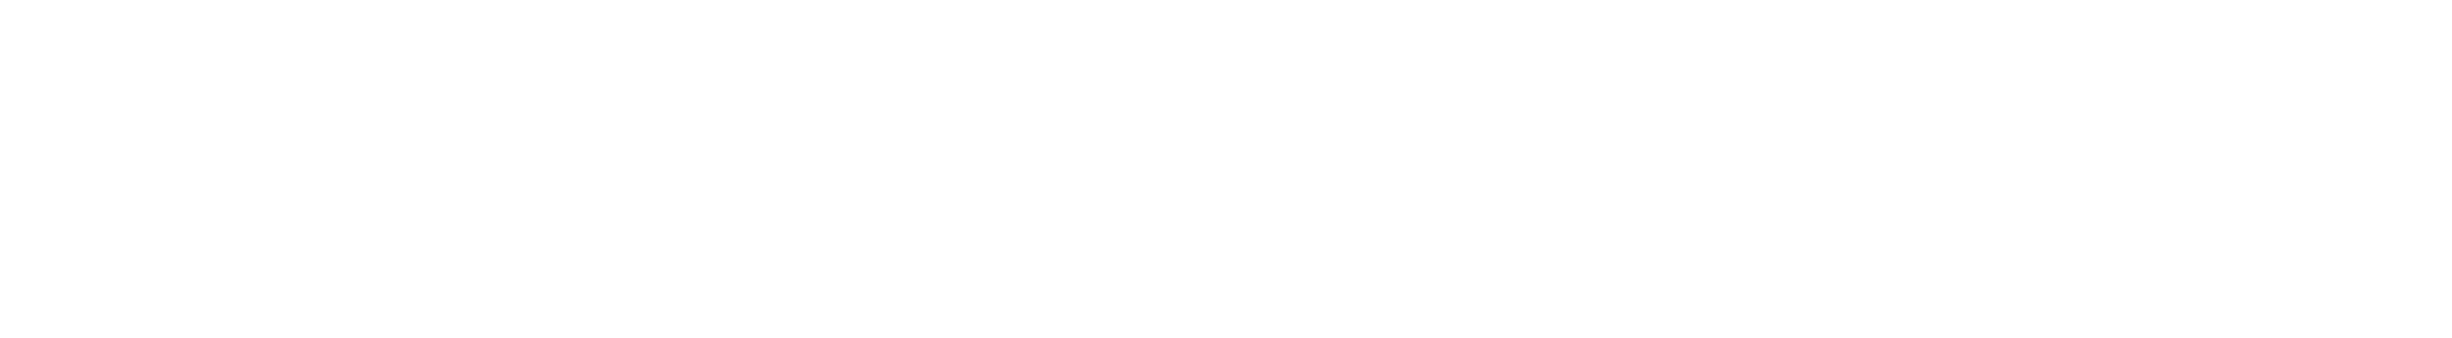 IdeaScale_Logo_White-3